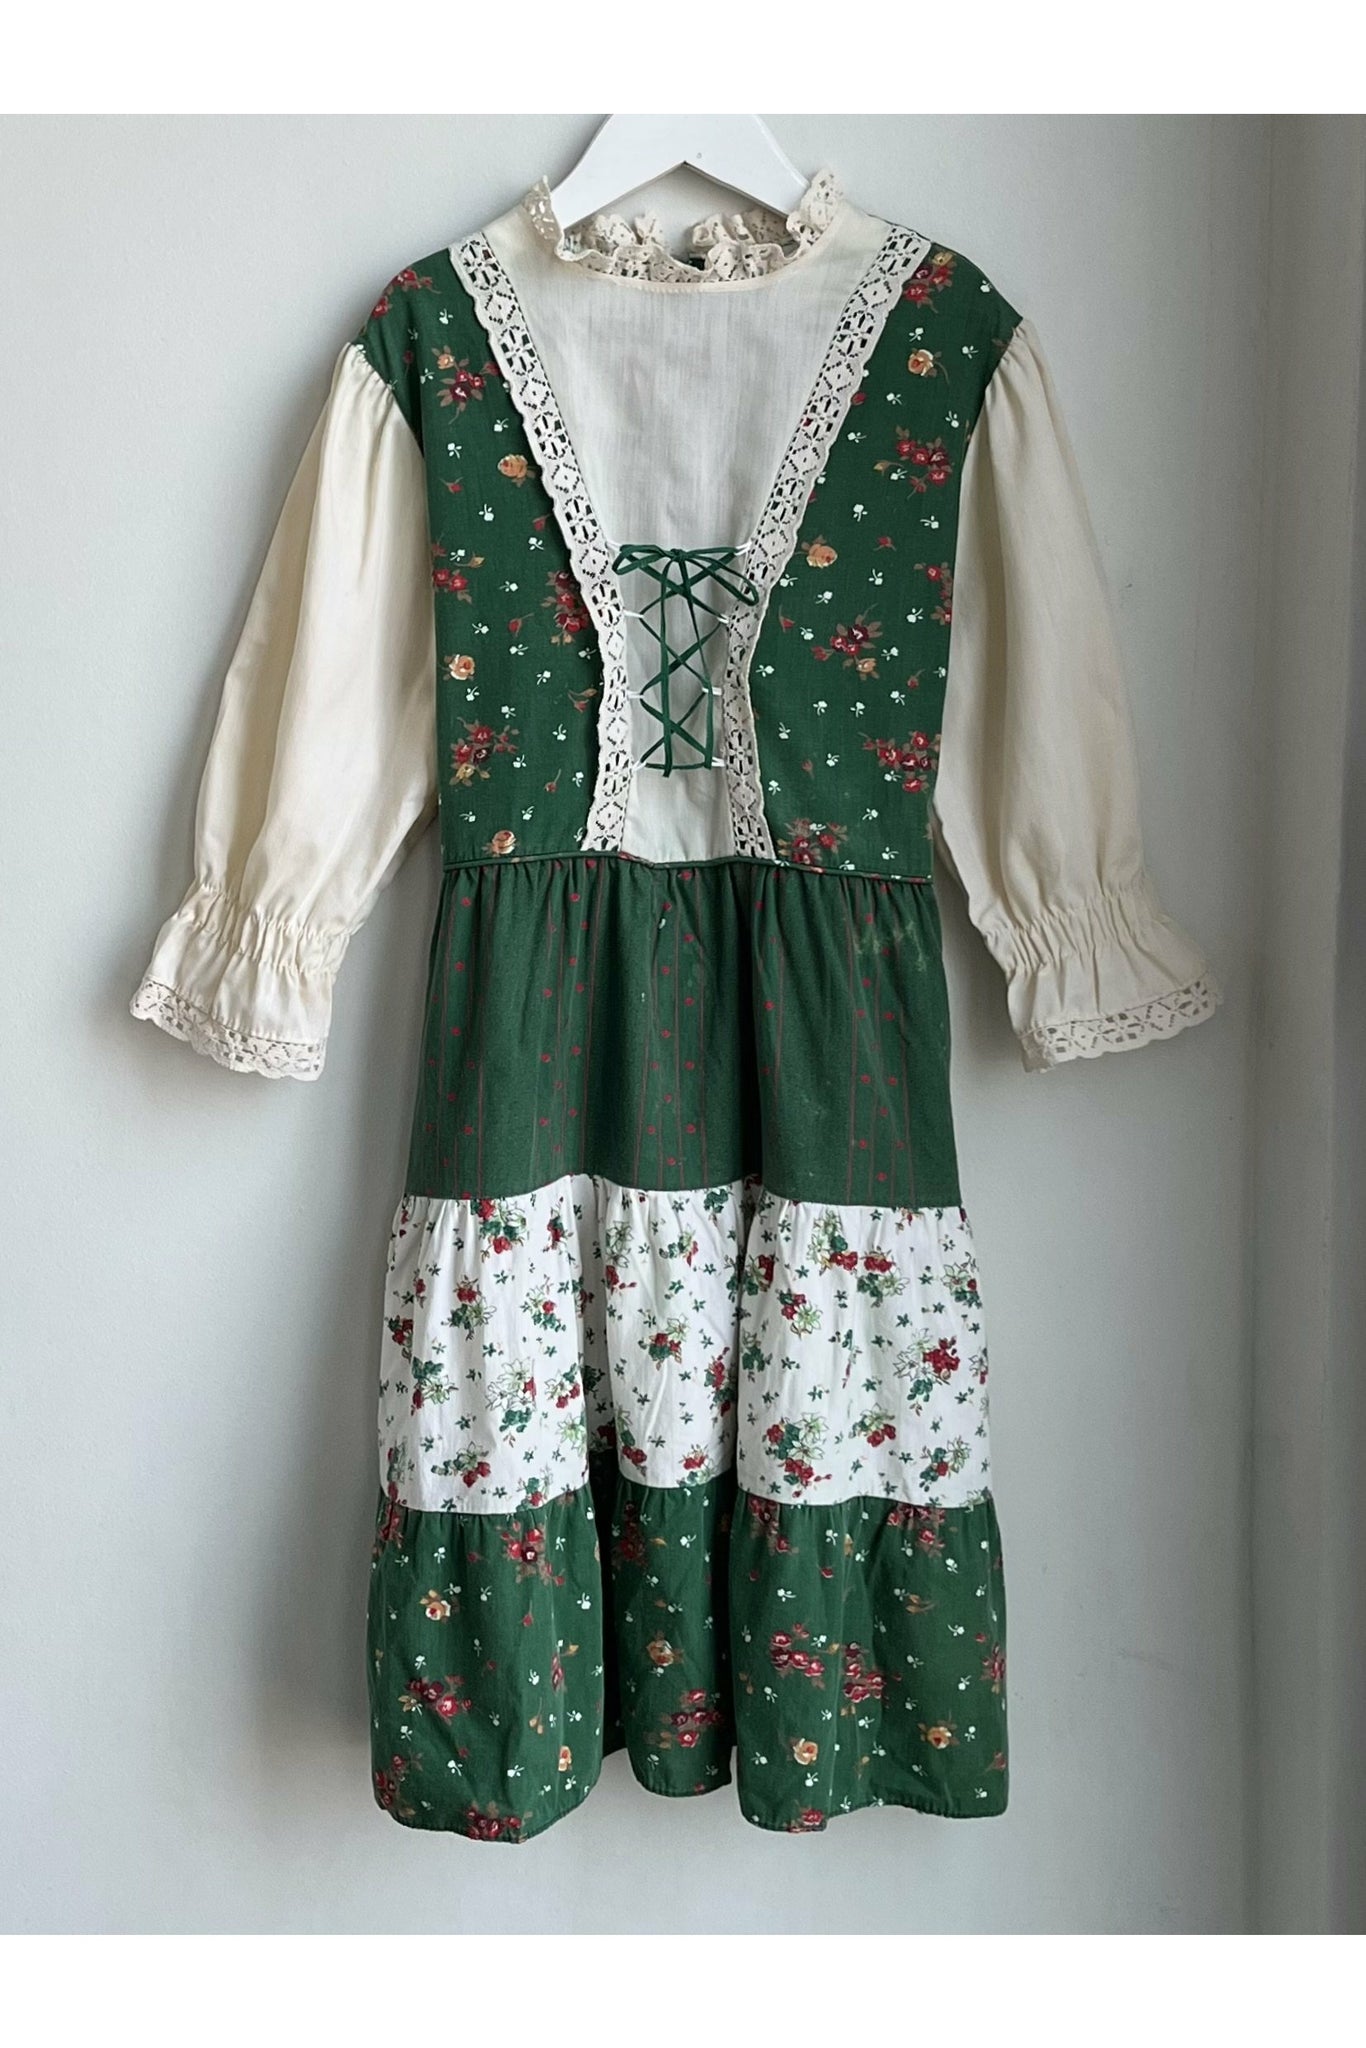 Vintage Gunne Sax-esque Corset Prairie Dress - Size 12 or XXS XS